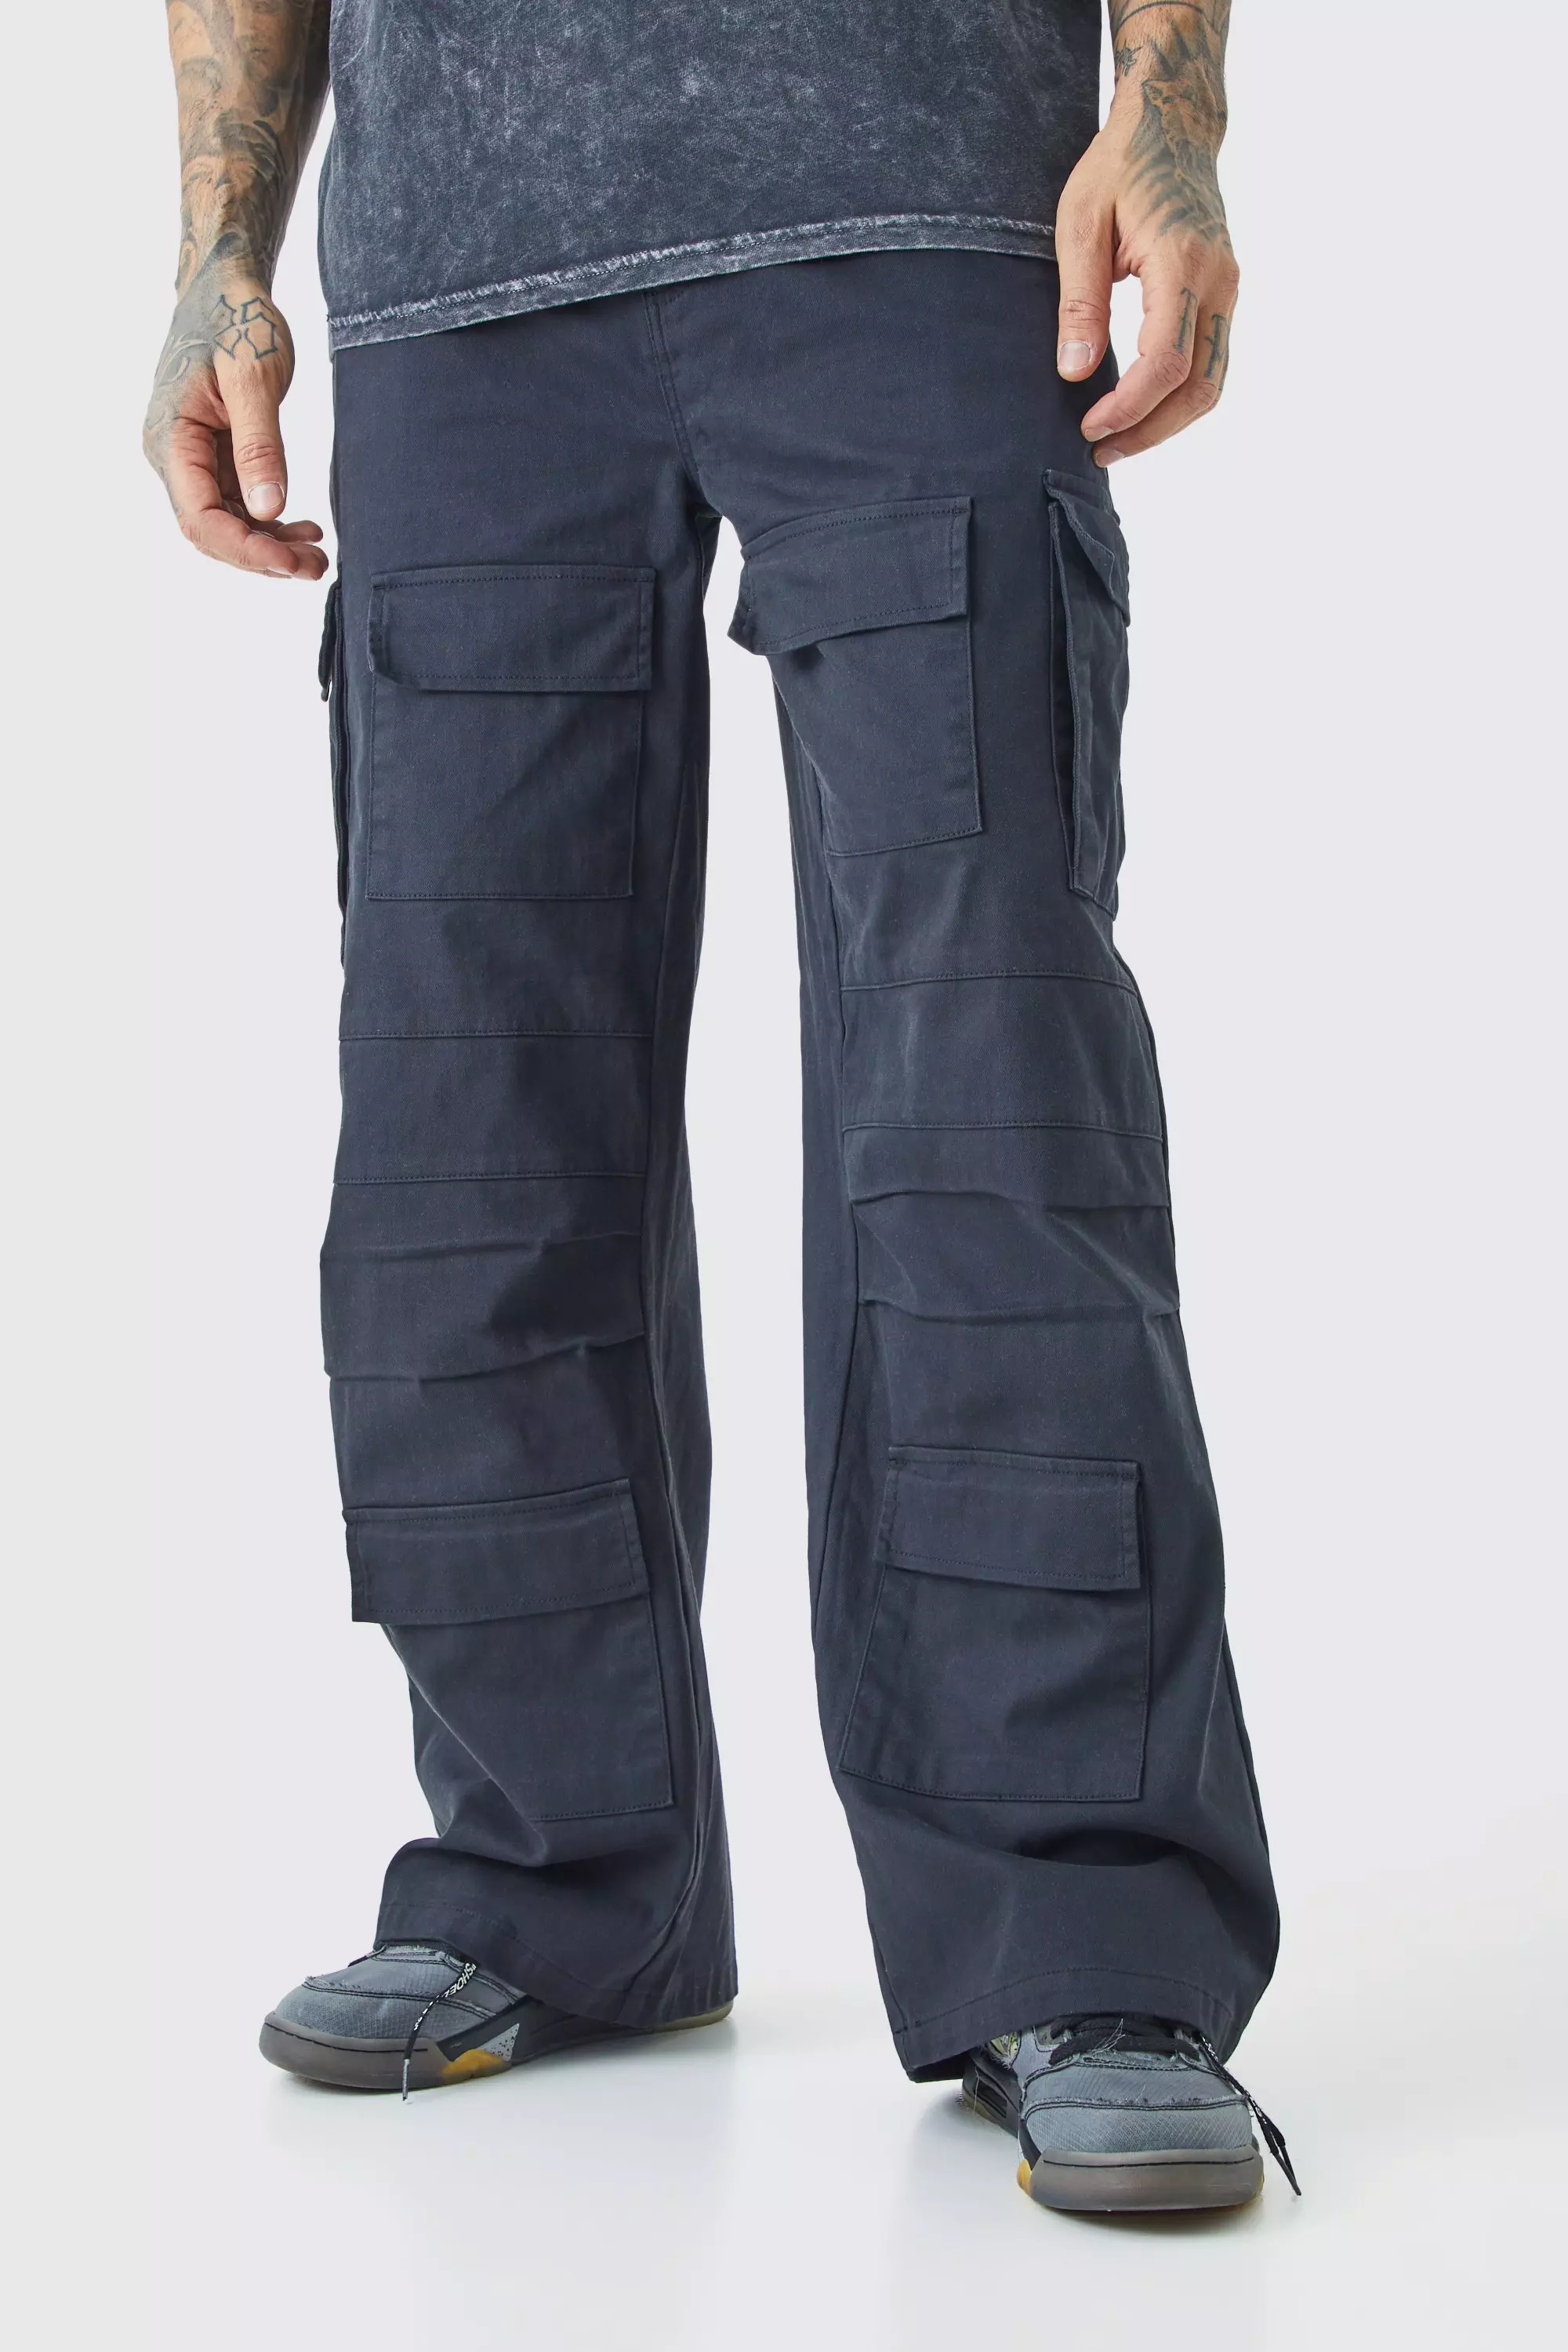 Buy Online Mens Black 7 Pocket Twill Cargo Pants at Zobello